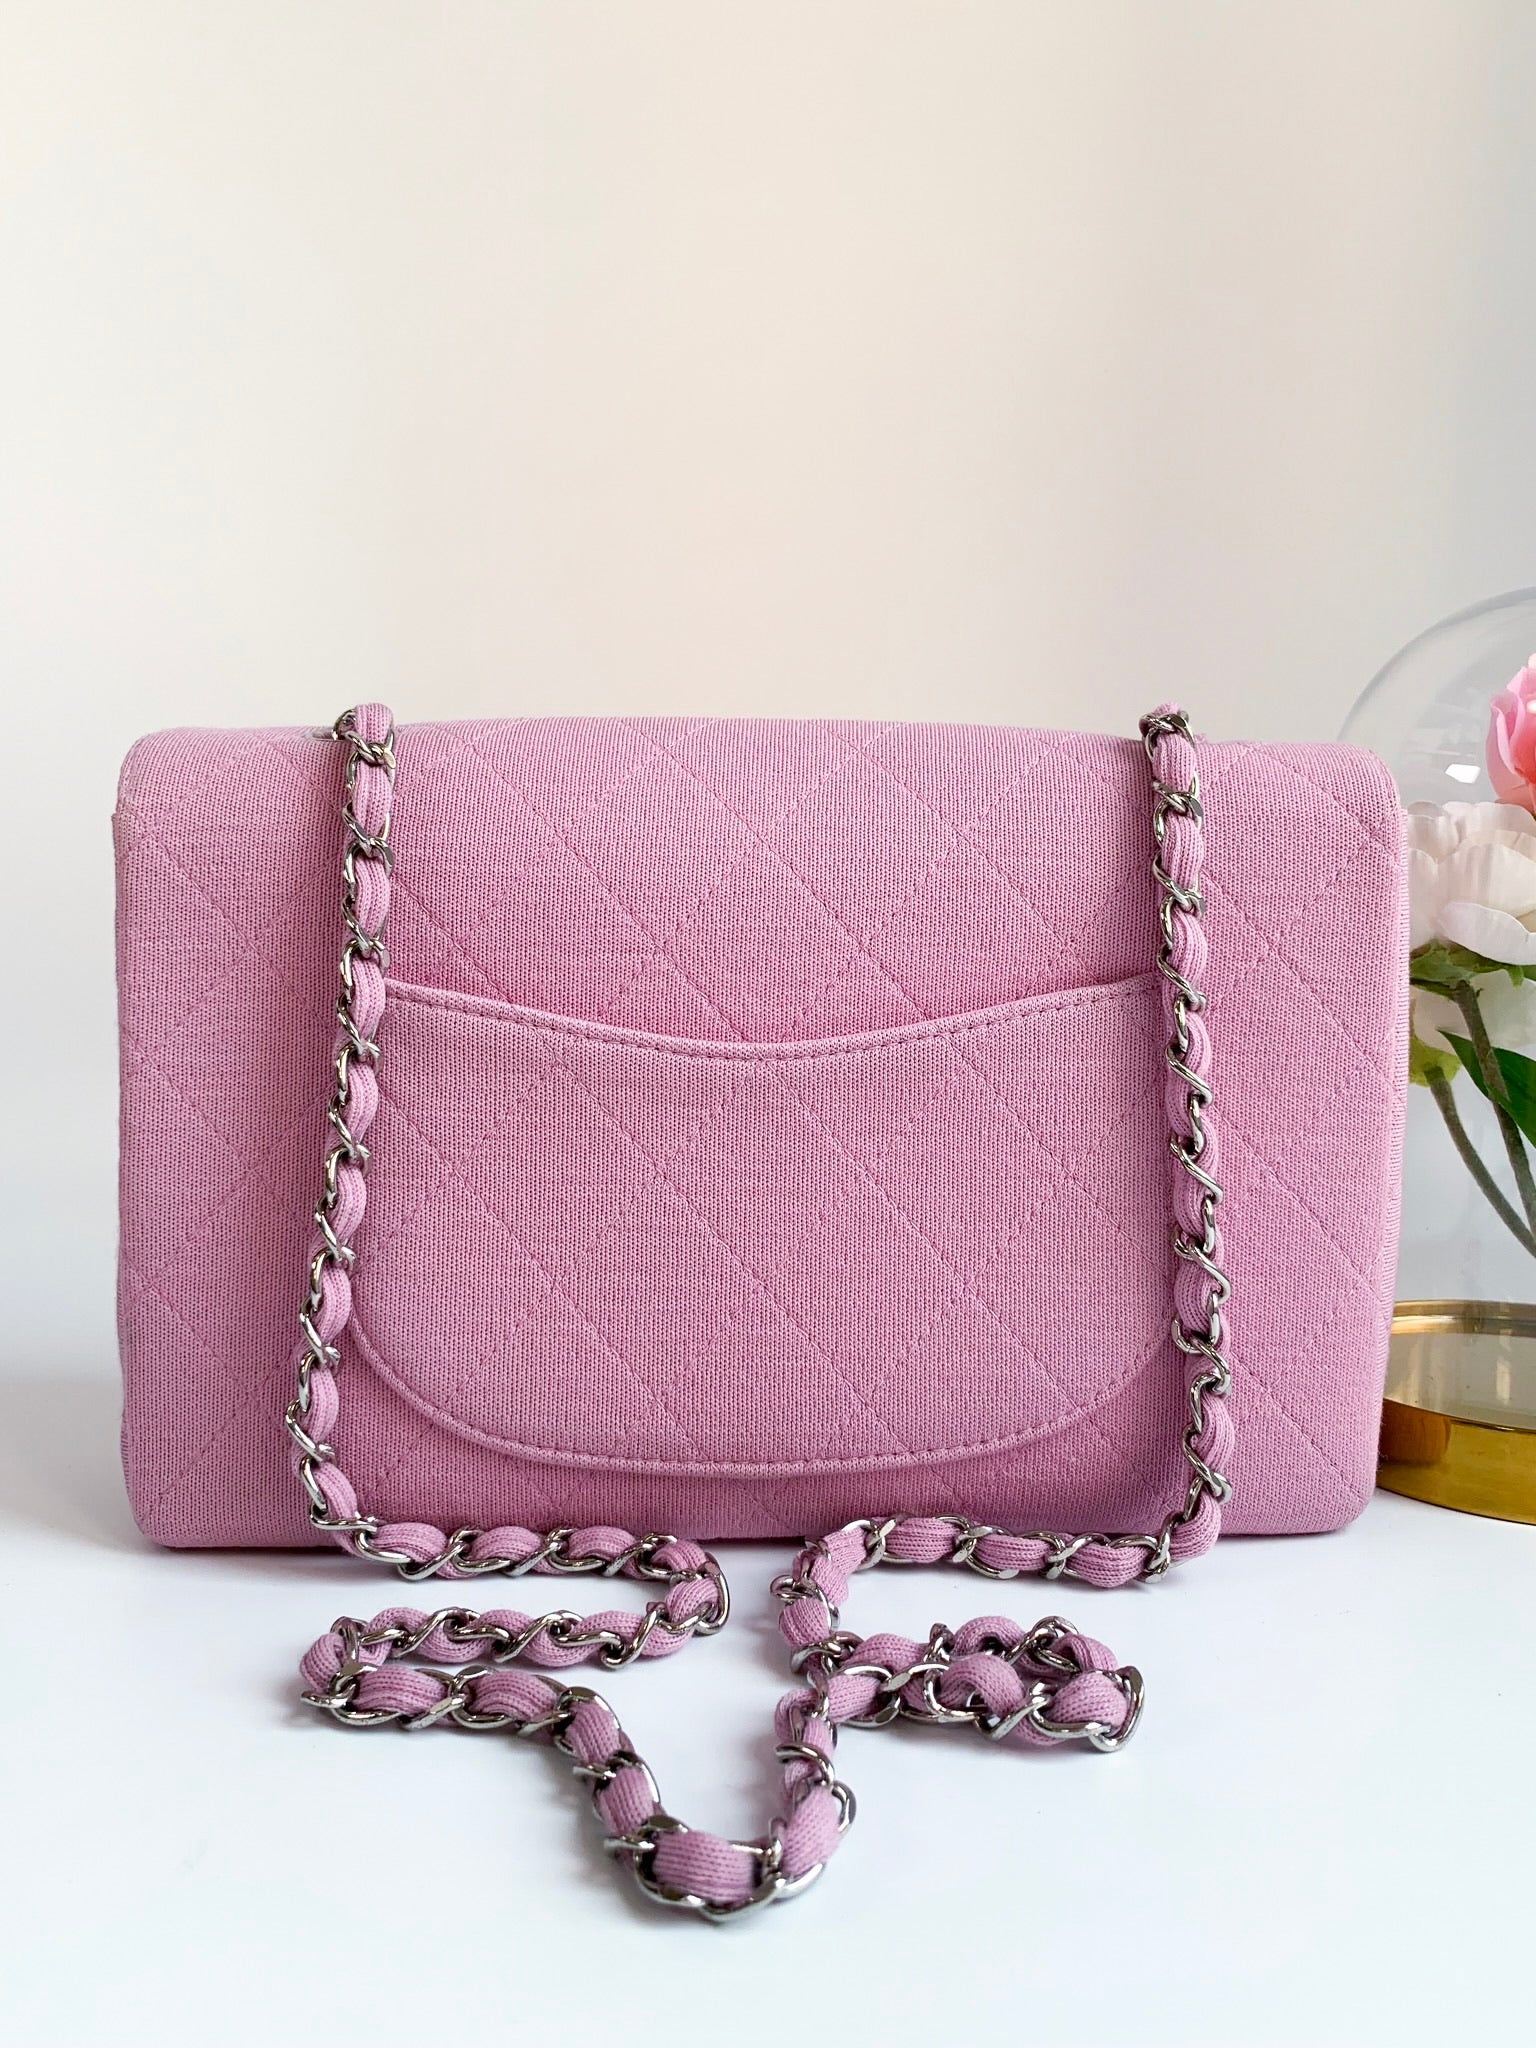 Chanel Women's Pink Fashion